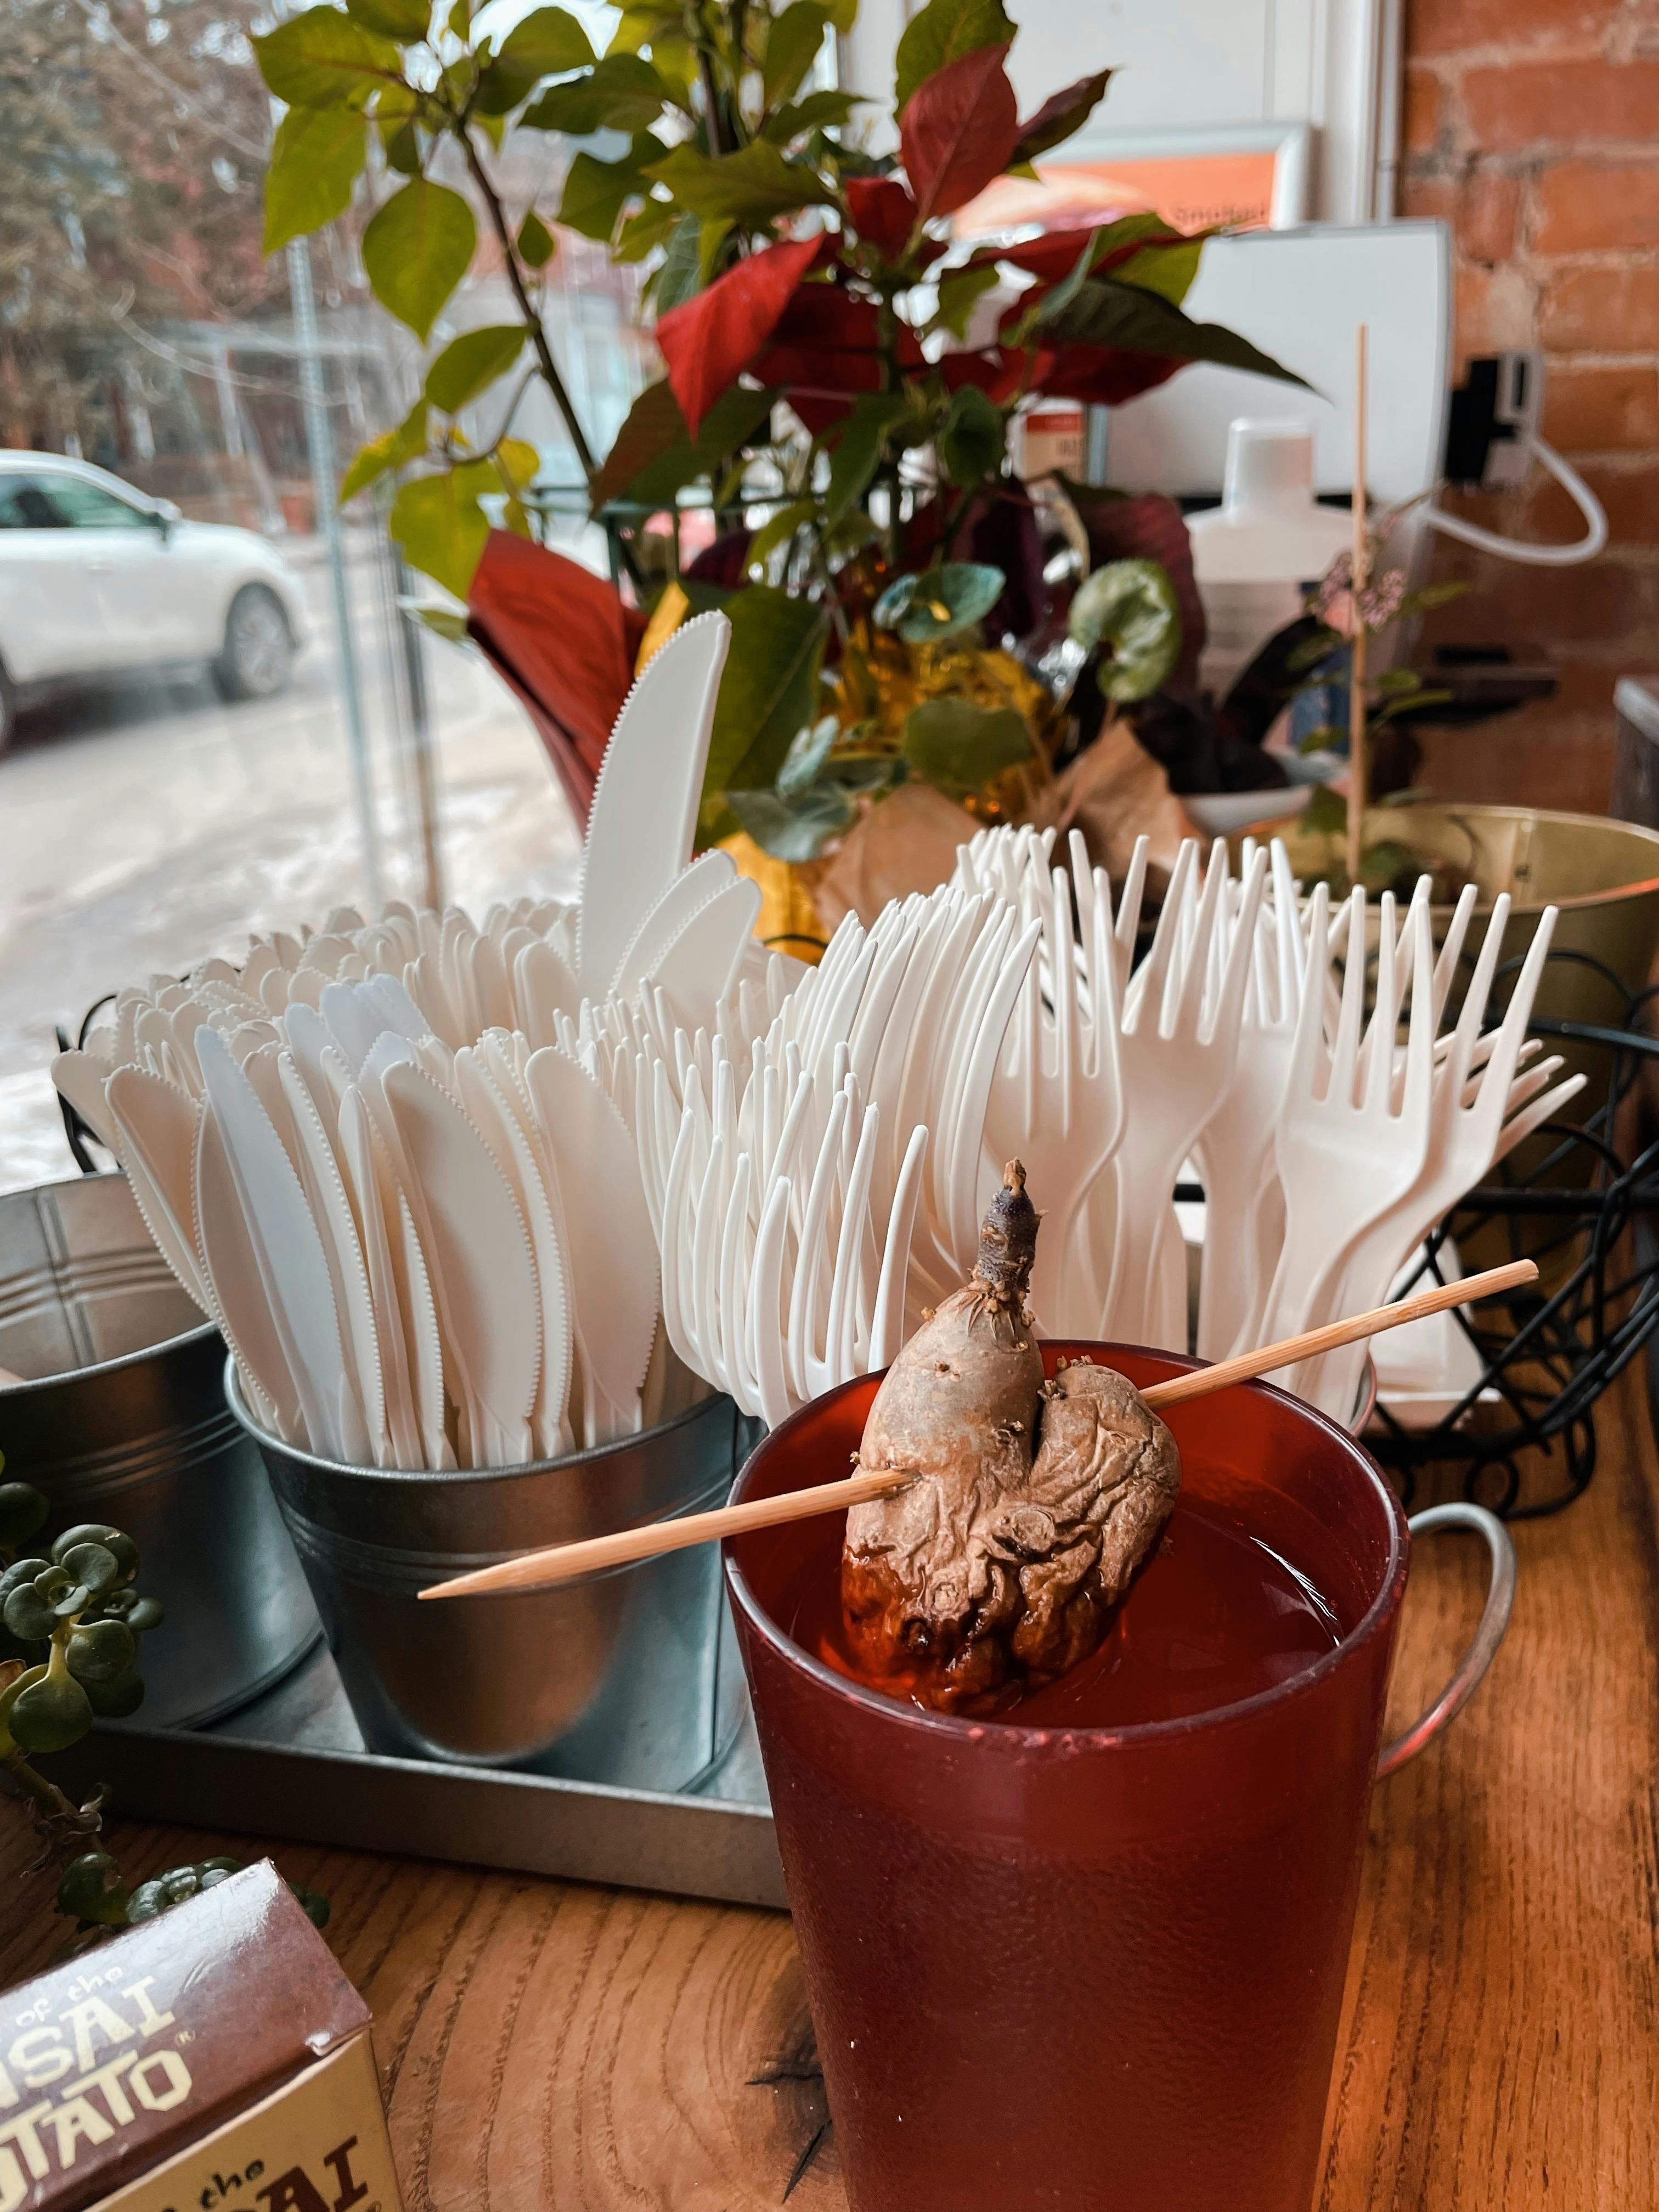 An array of compostable utensils